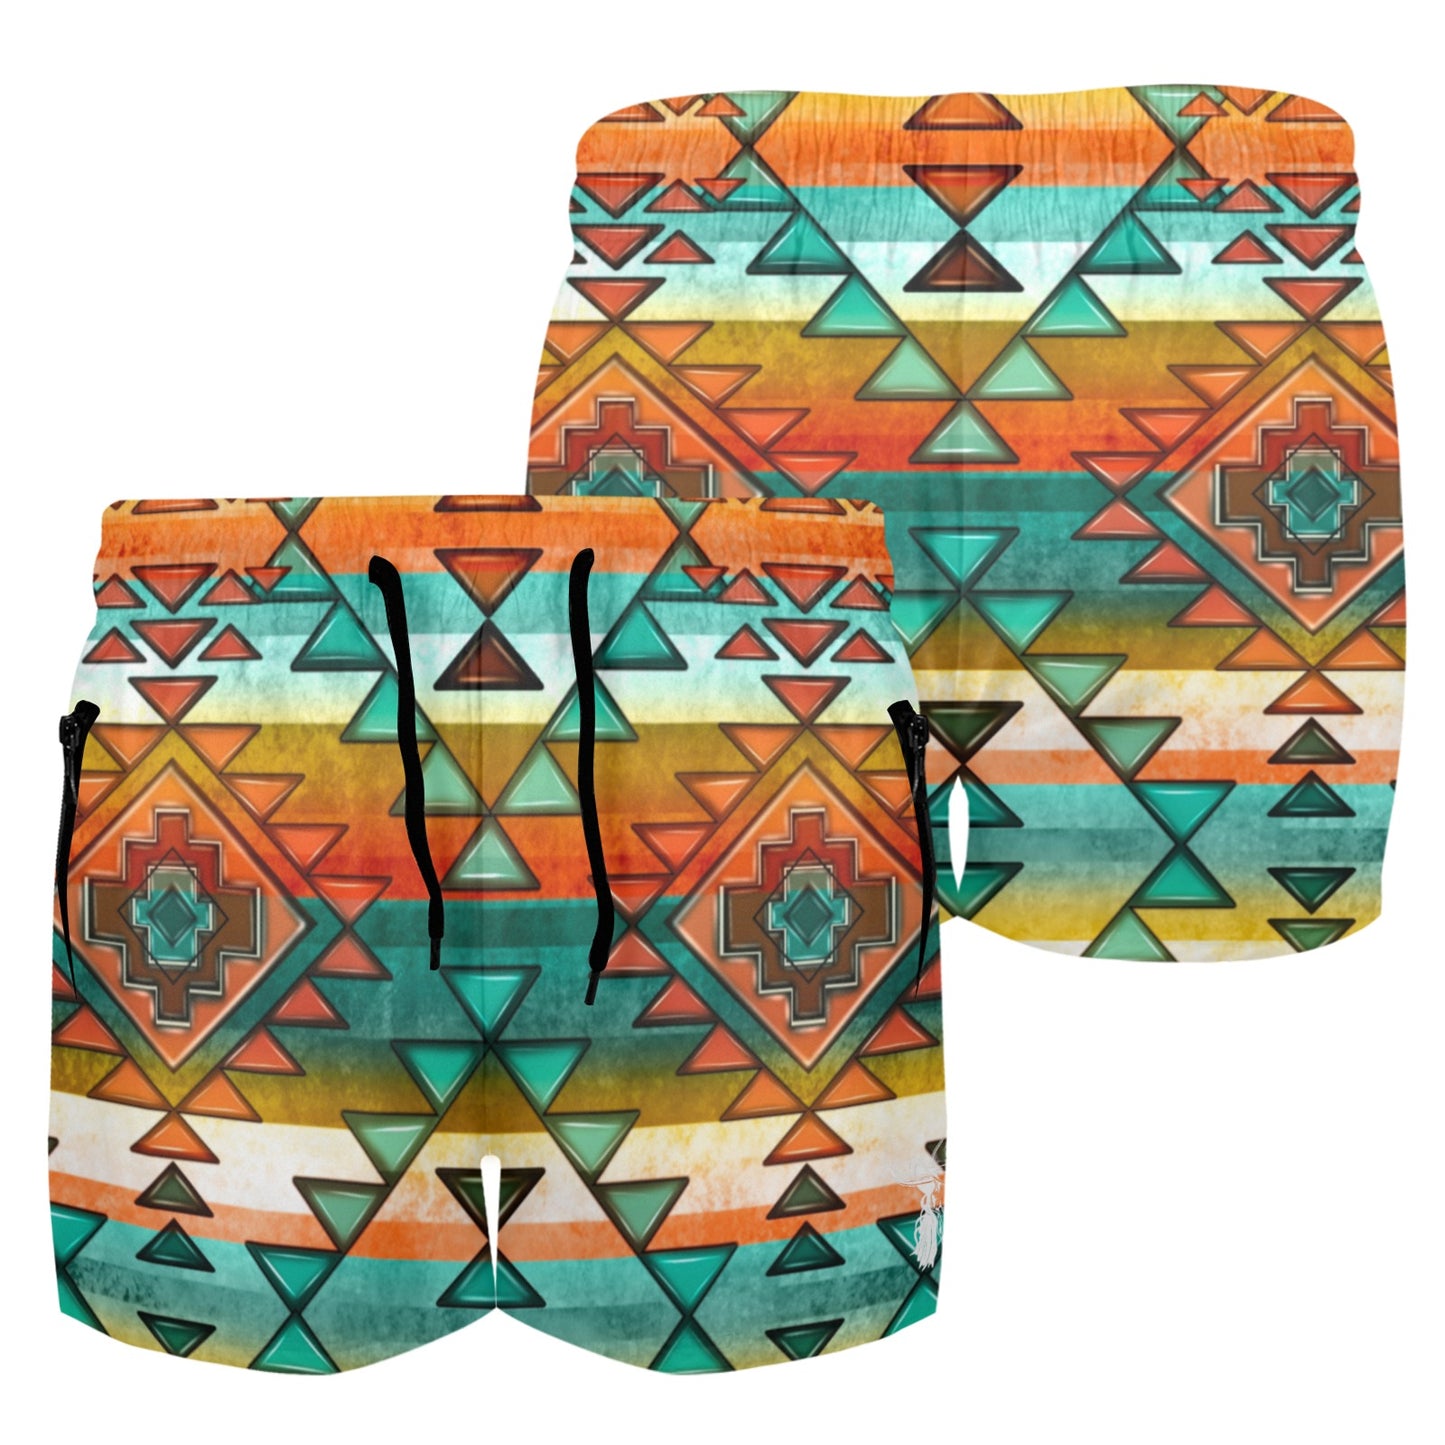 Mullet Cowboy Orange Aztec Beach Shorts